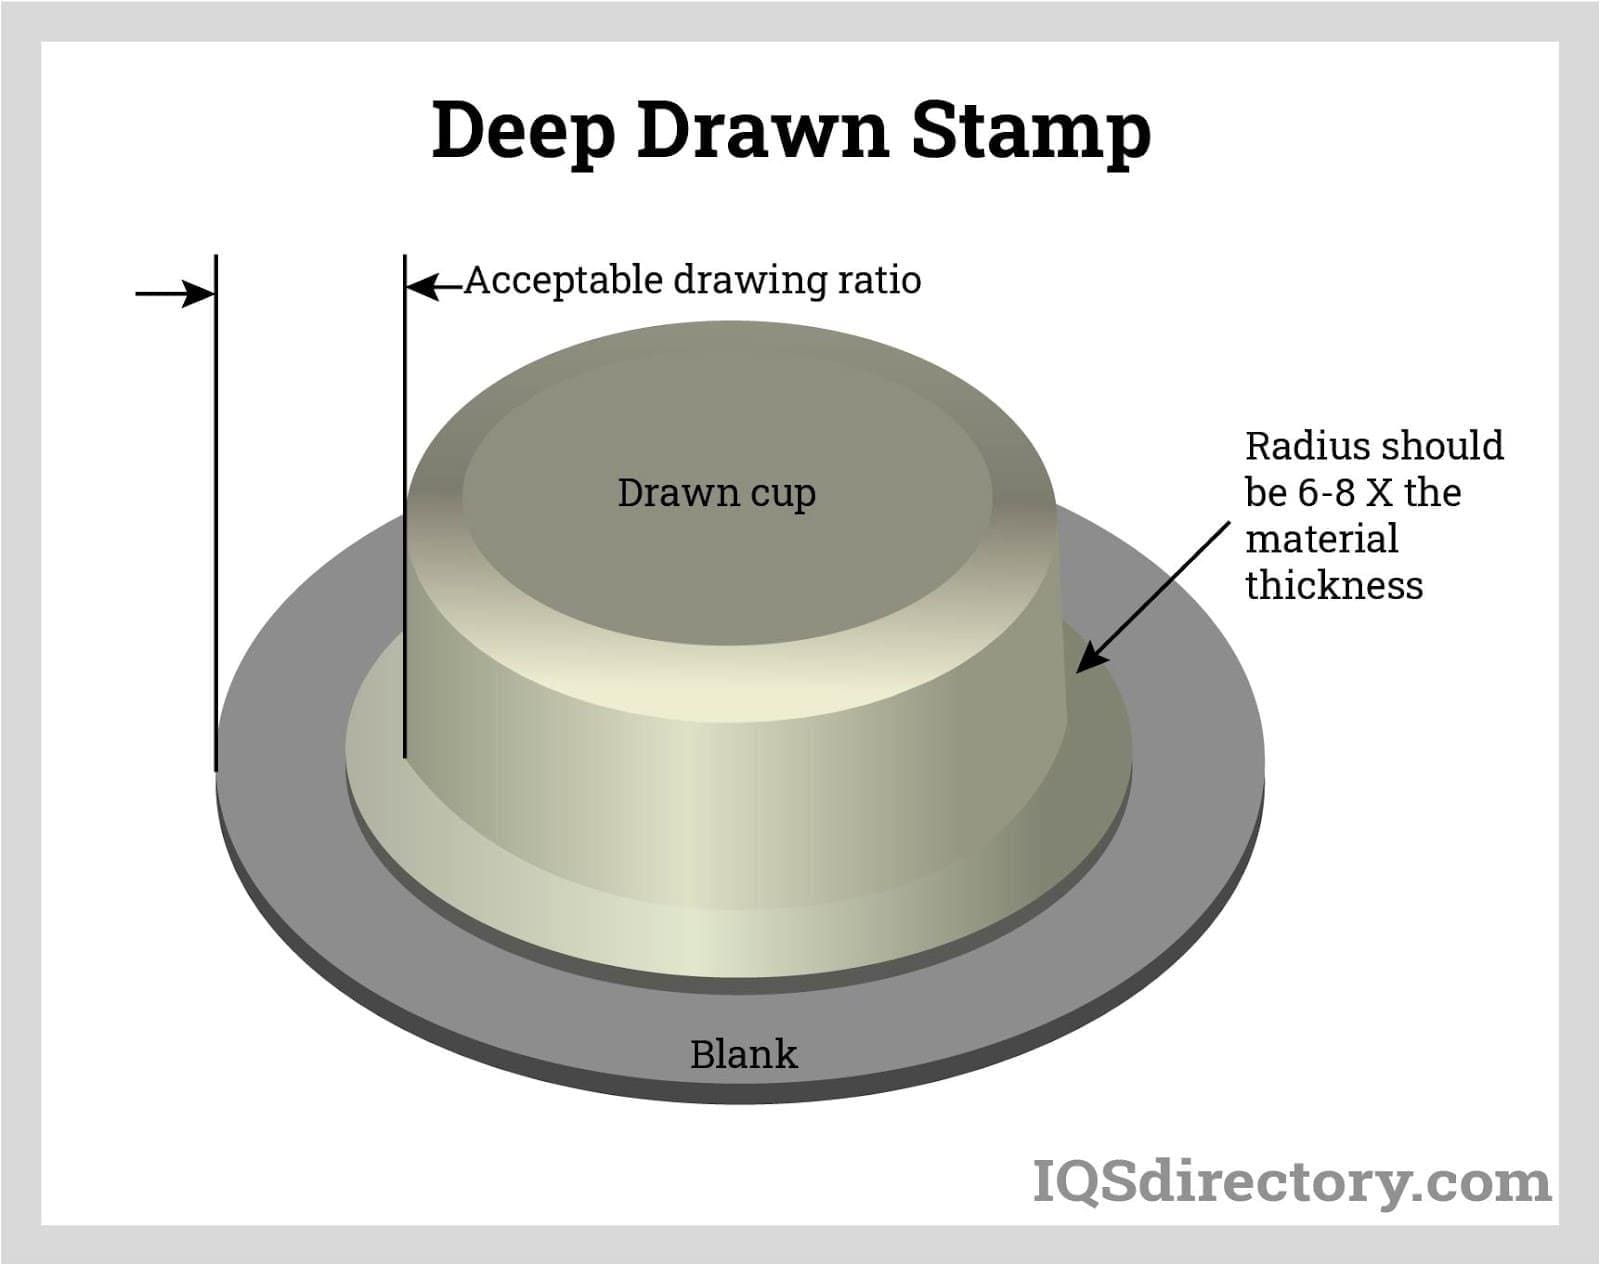 Deep Drawn Stamp